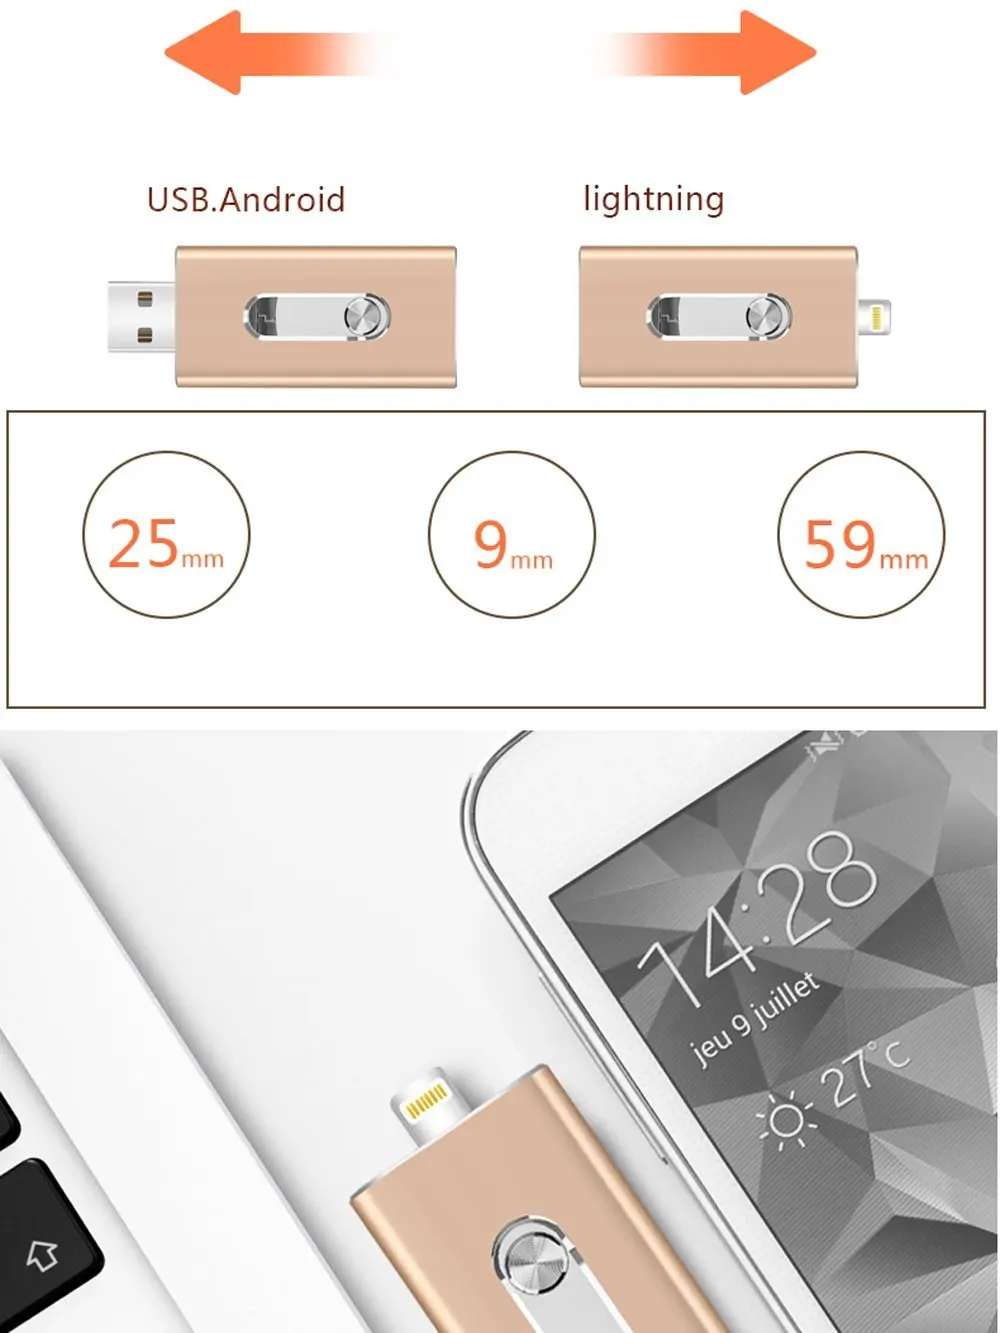 Usb флэш-накопитель для iPhone флеш-накопитель Флешка 3-в-1 Освещение USB флэш-память 3,0 зашифрованный флеш-накопитель 256 ГБ Usb ключ